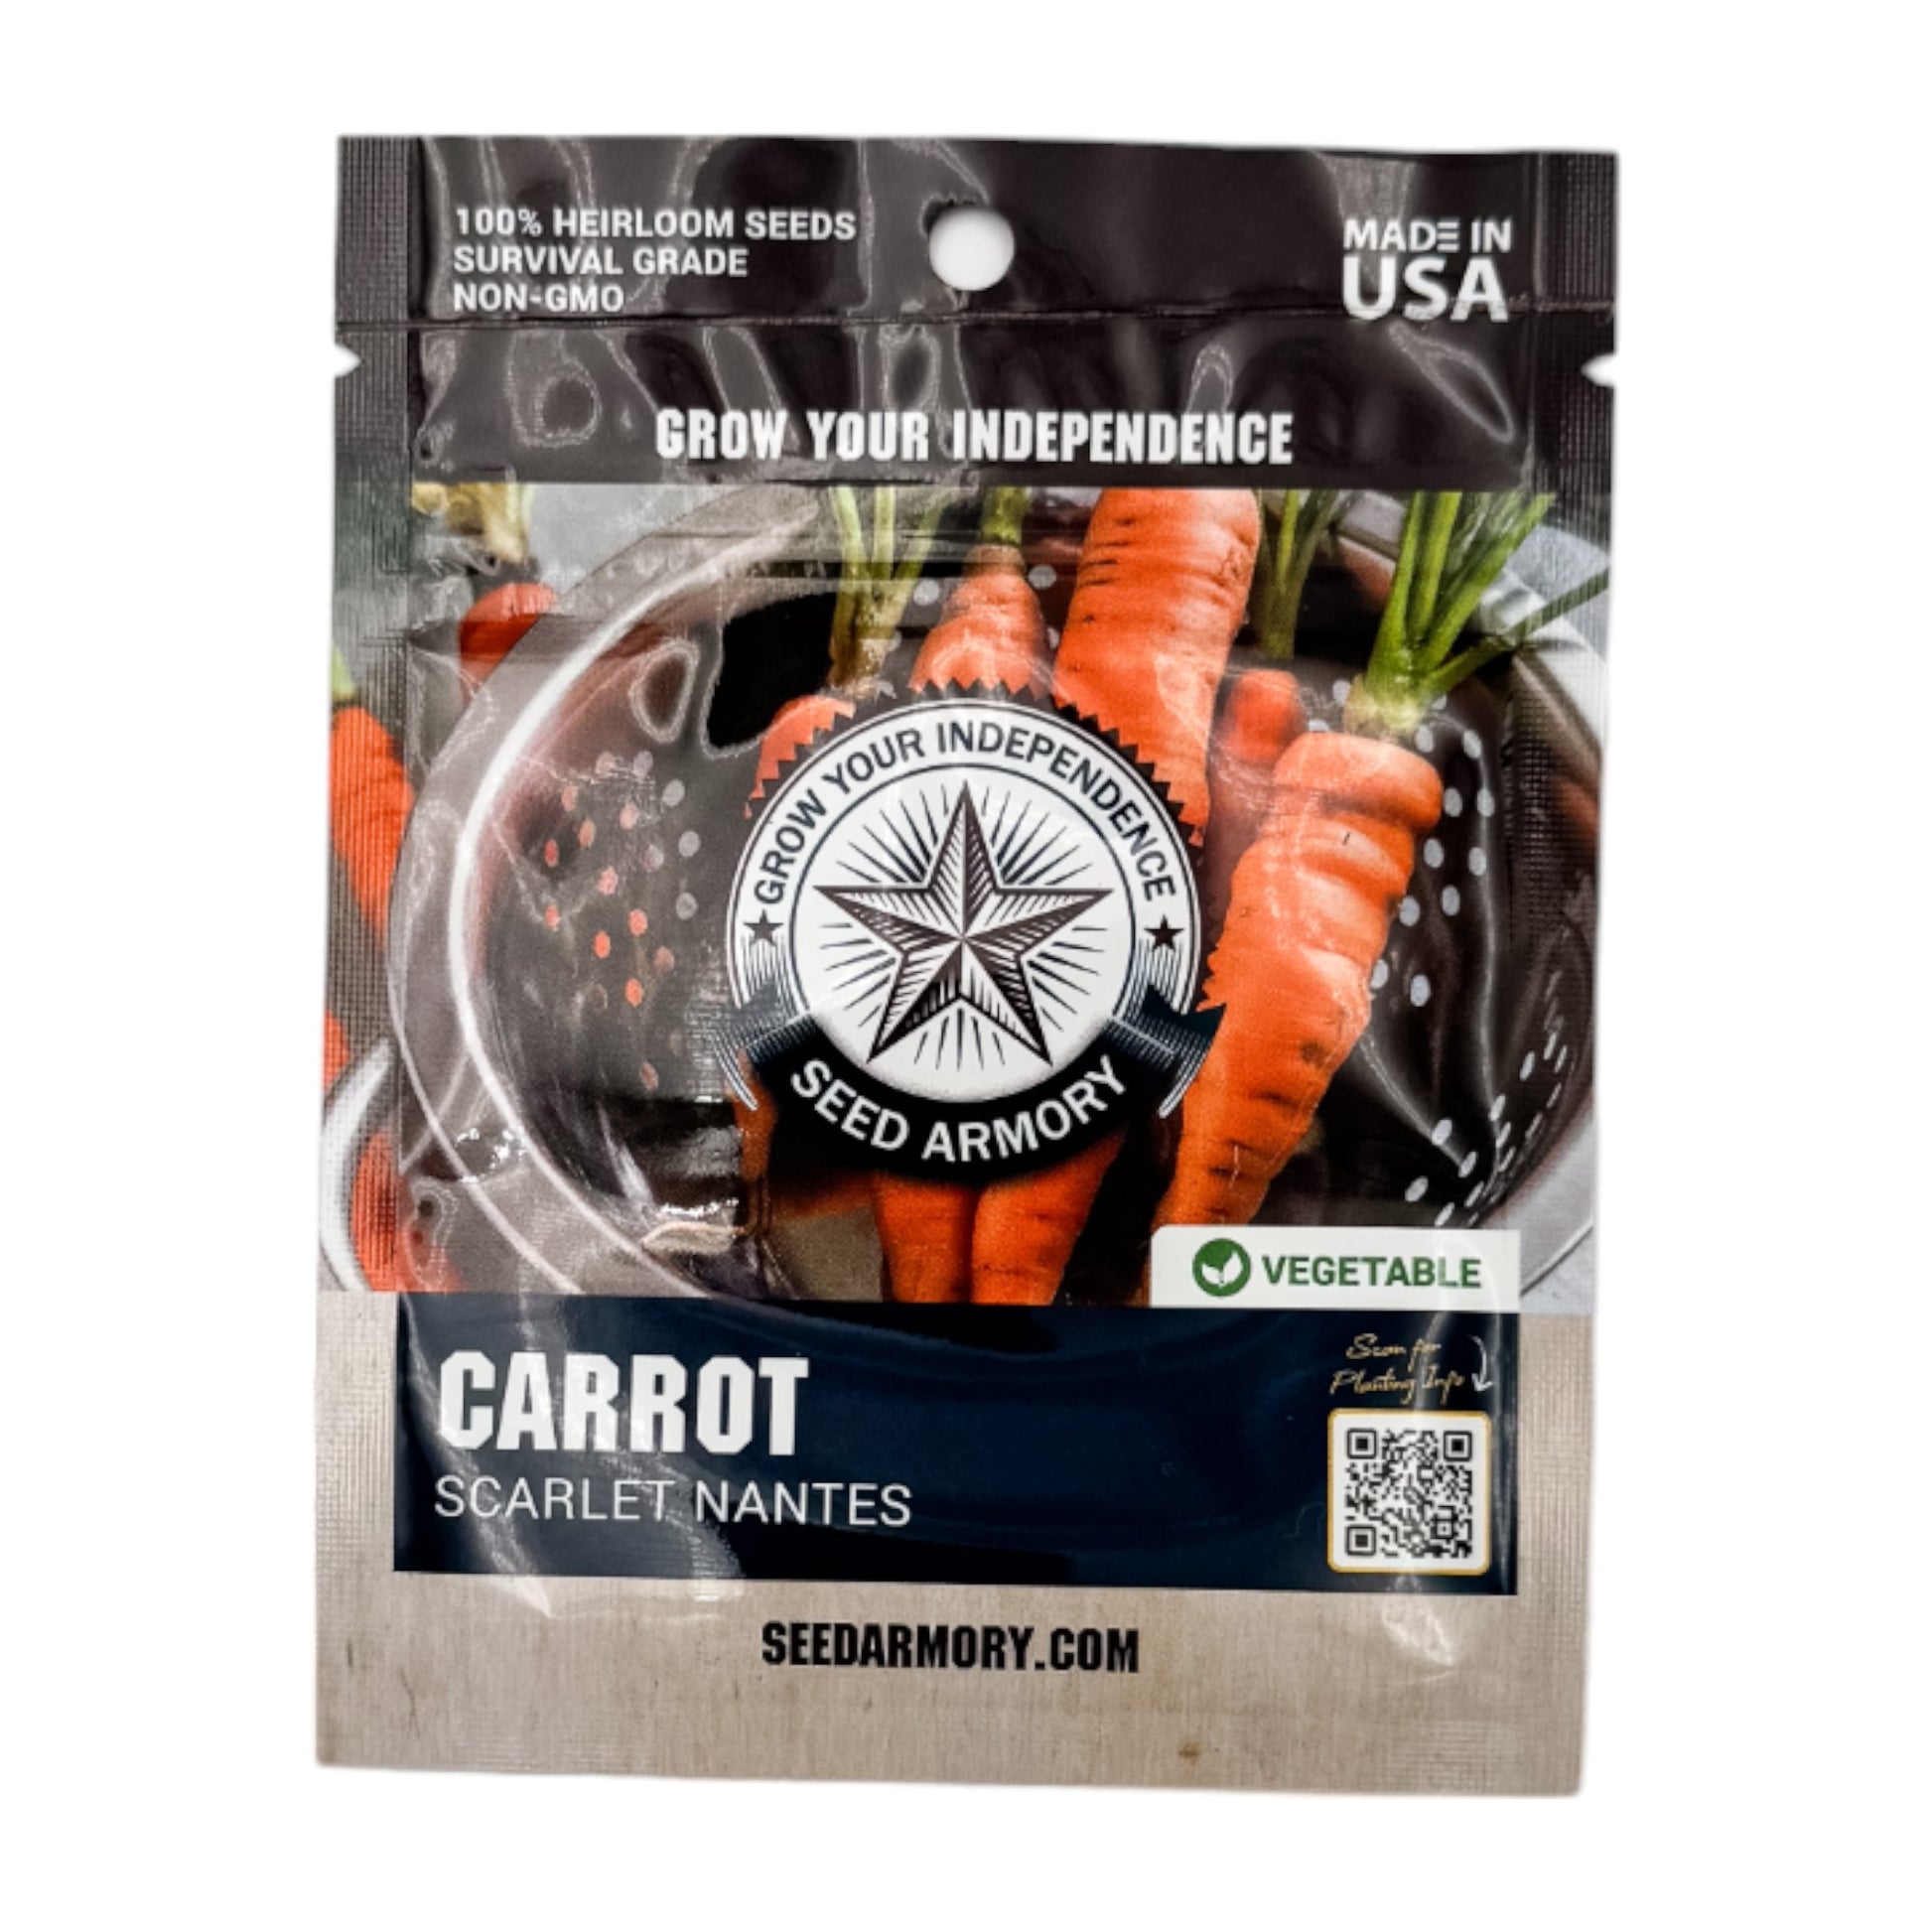 Packet of Heirloom Scarlet Nantes carrot seeds